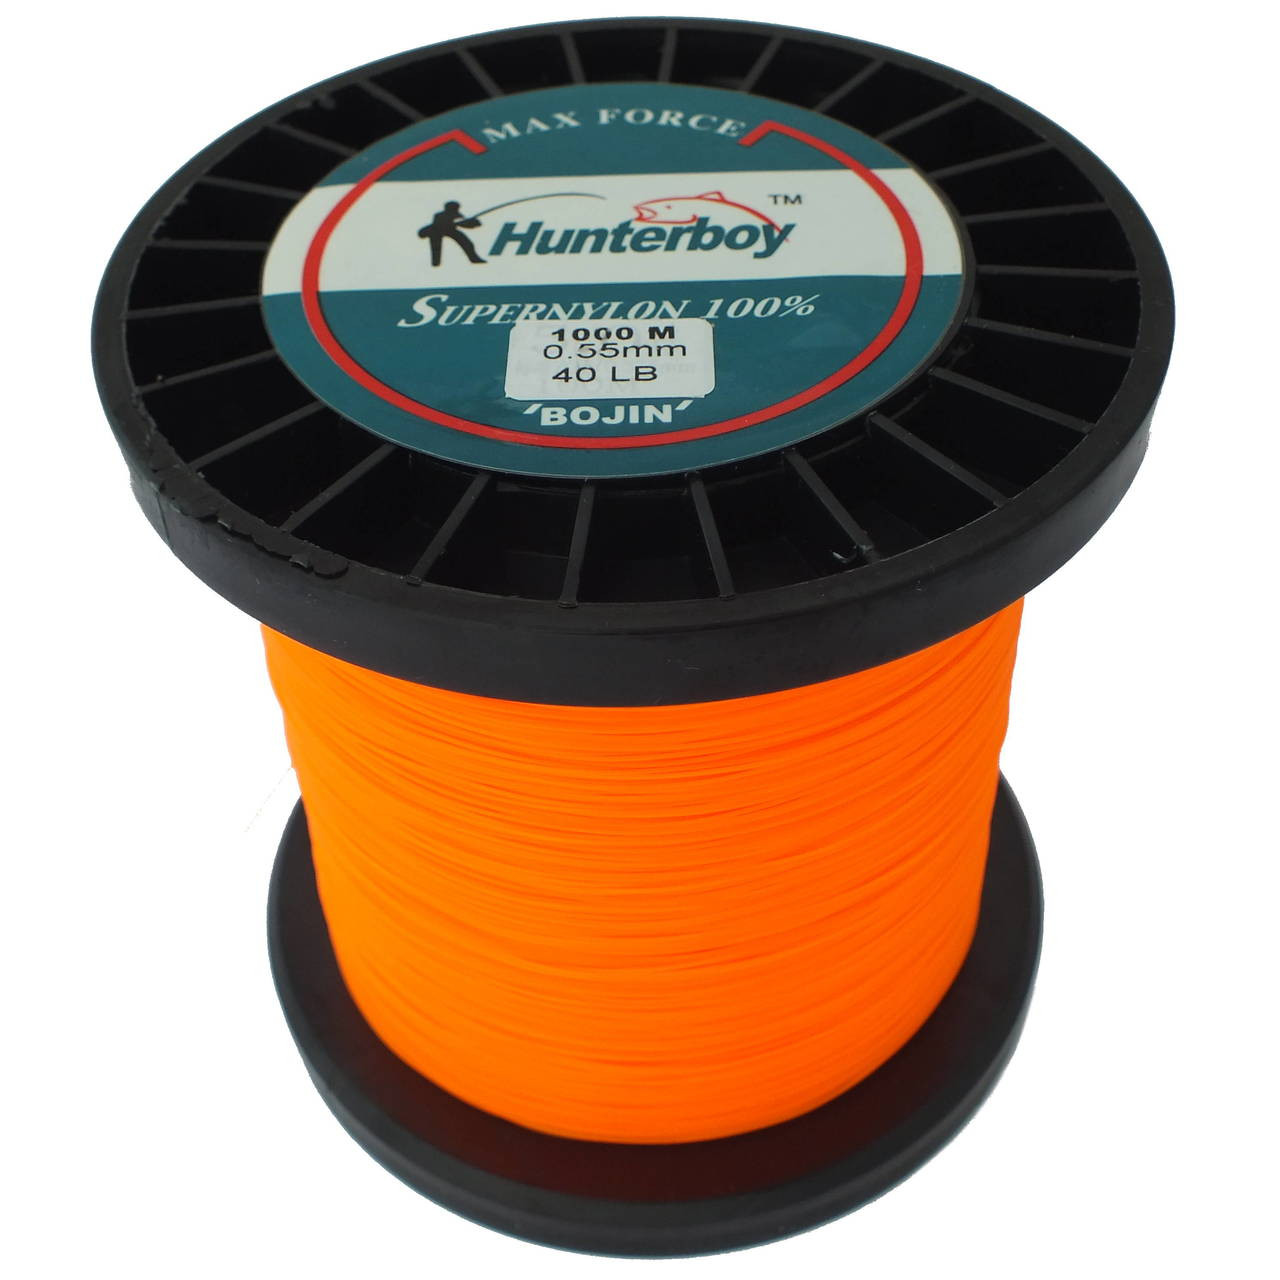 Hunterboy Opaque Orange Nylon Fishing Line 1000m 40lb Super High